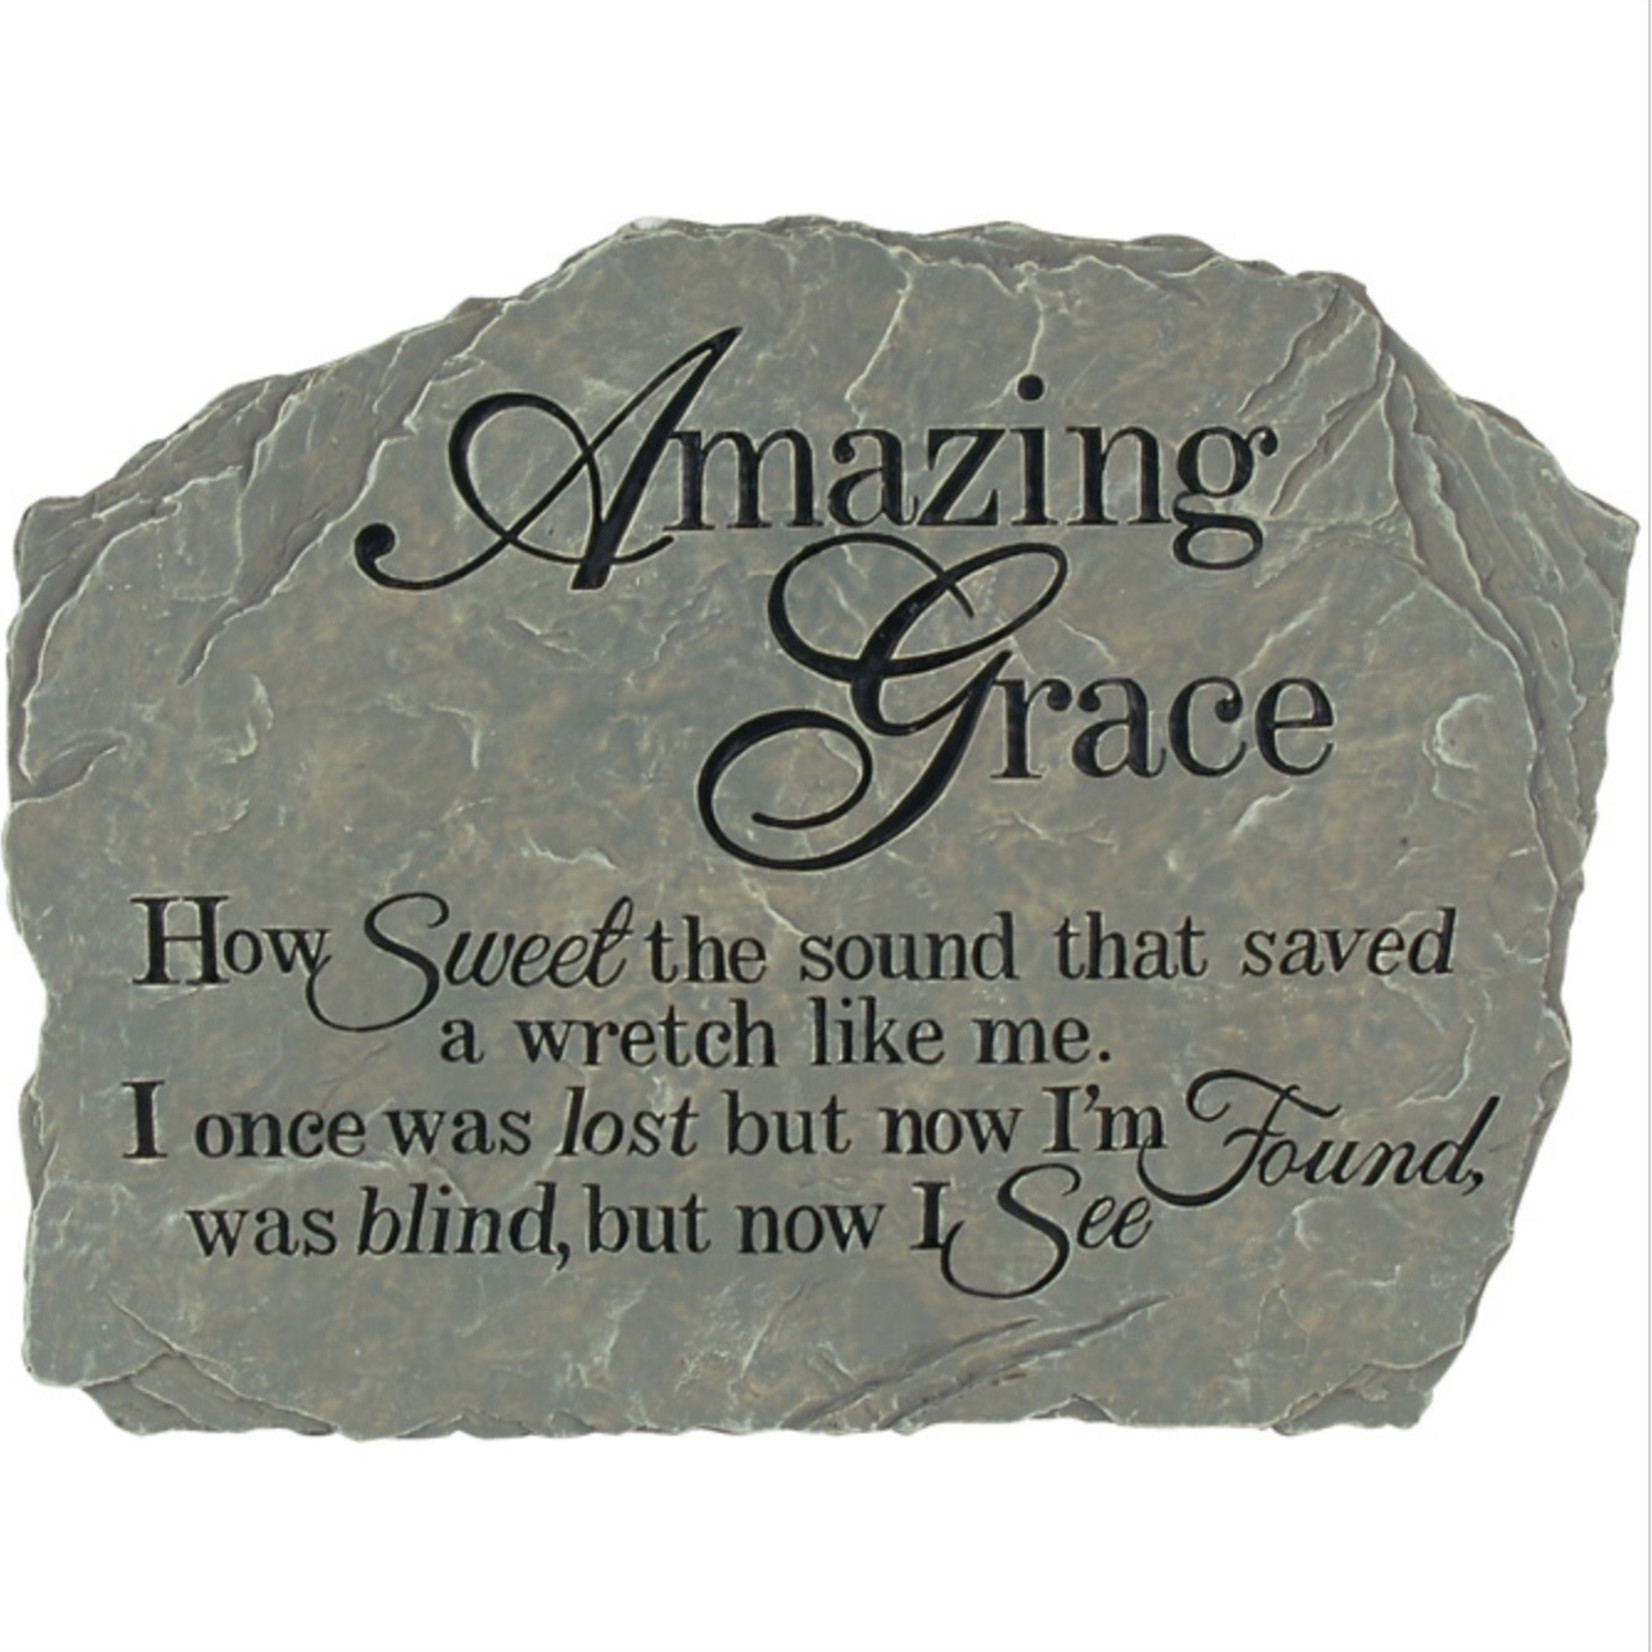 Amazing Grace Garden Stone